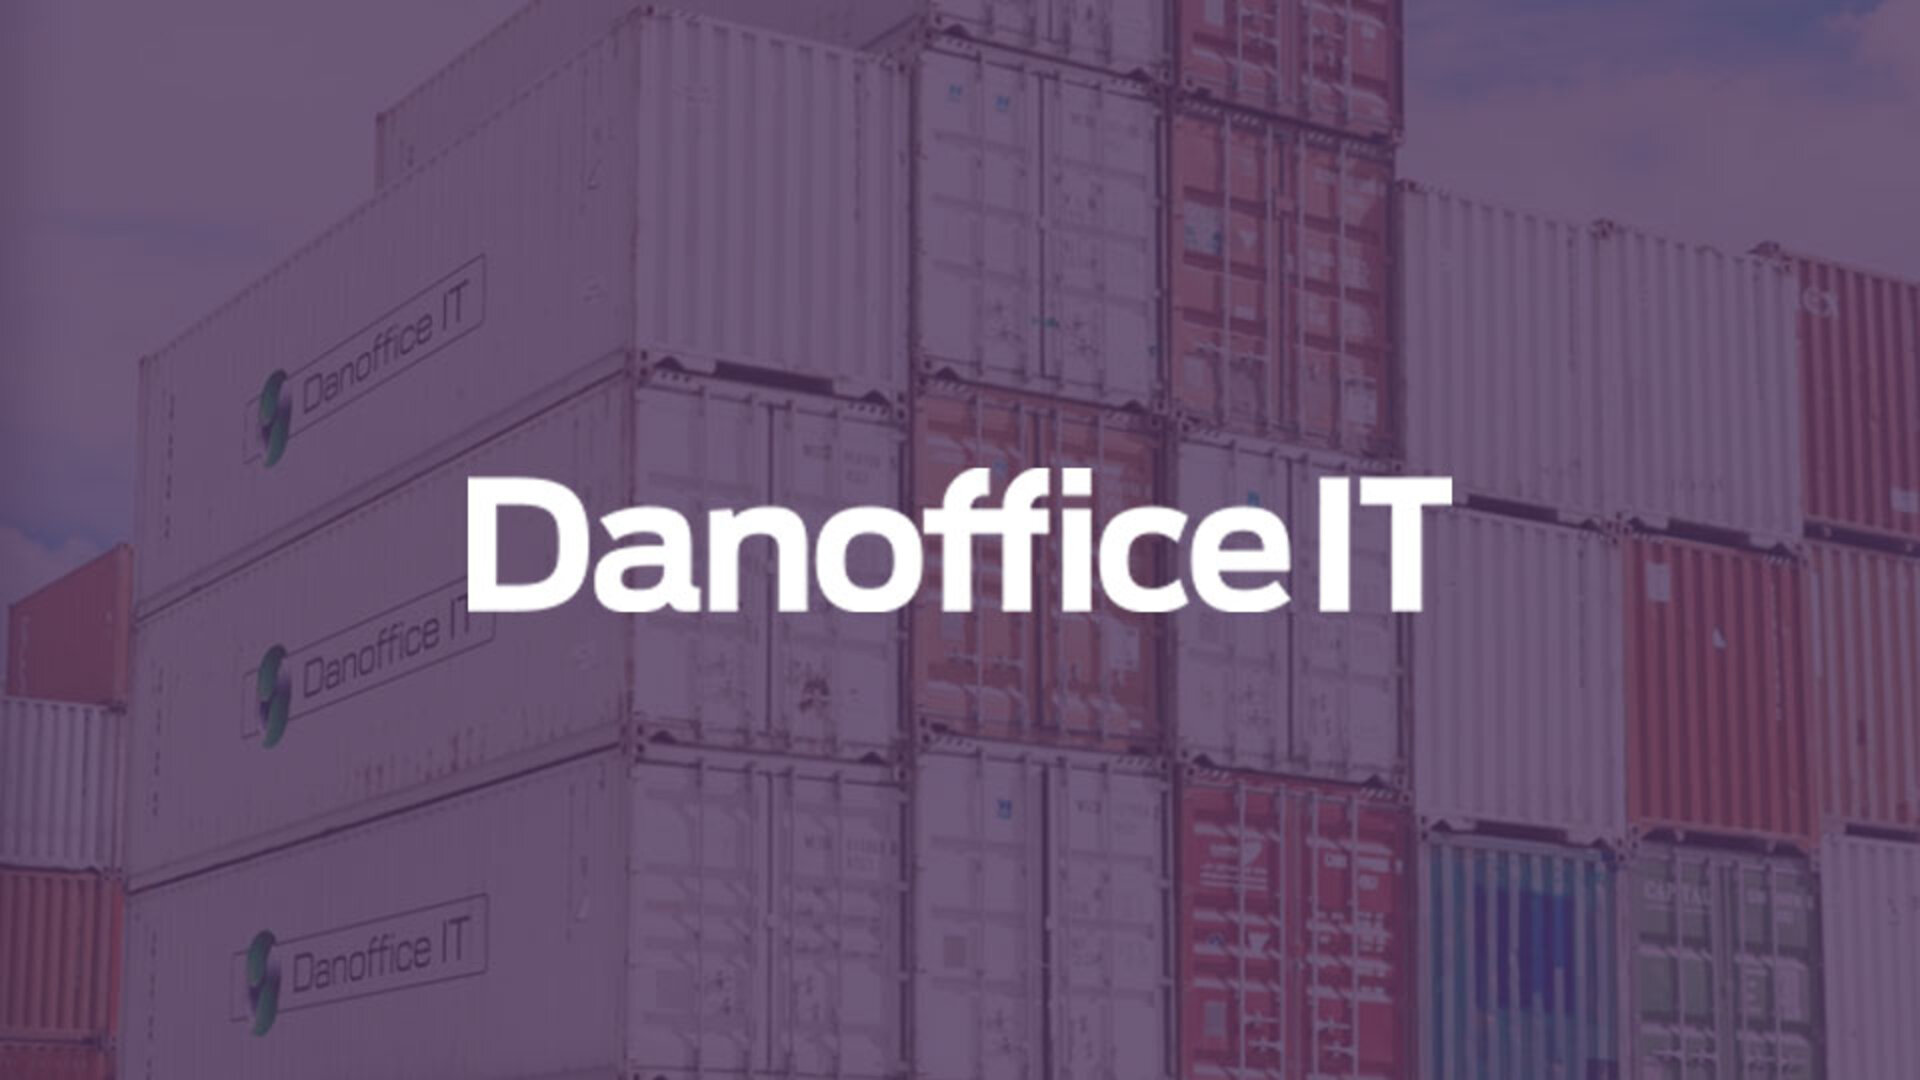 DanofficeIT logo